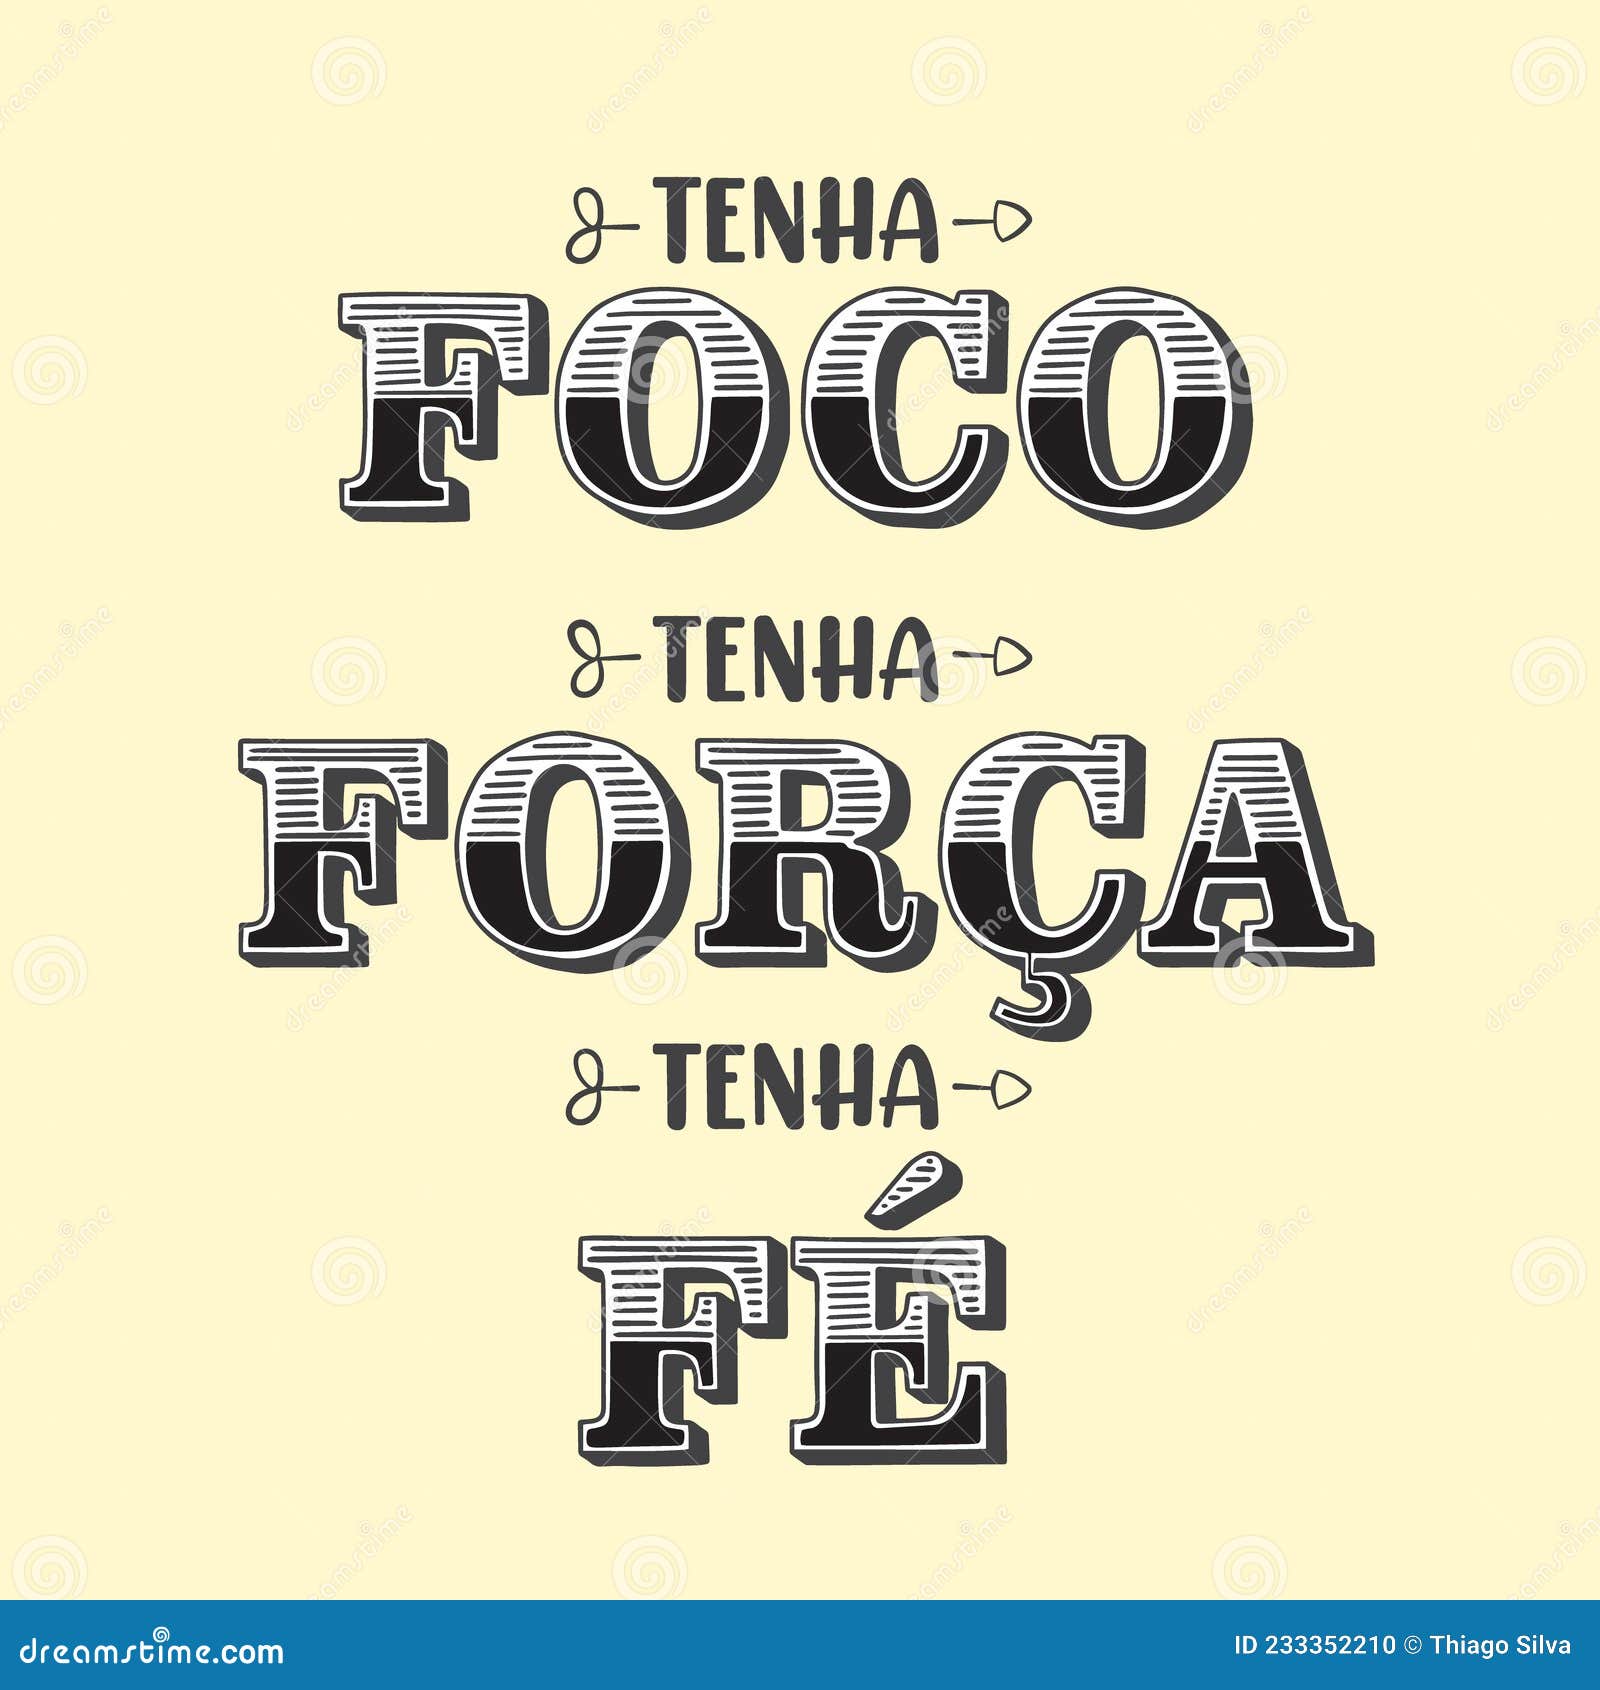 Portuguese phrases Pao pao queijo queijo  Learn portuguese, Portuguese  quotes, Portuguese words